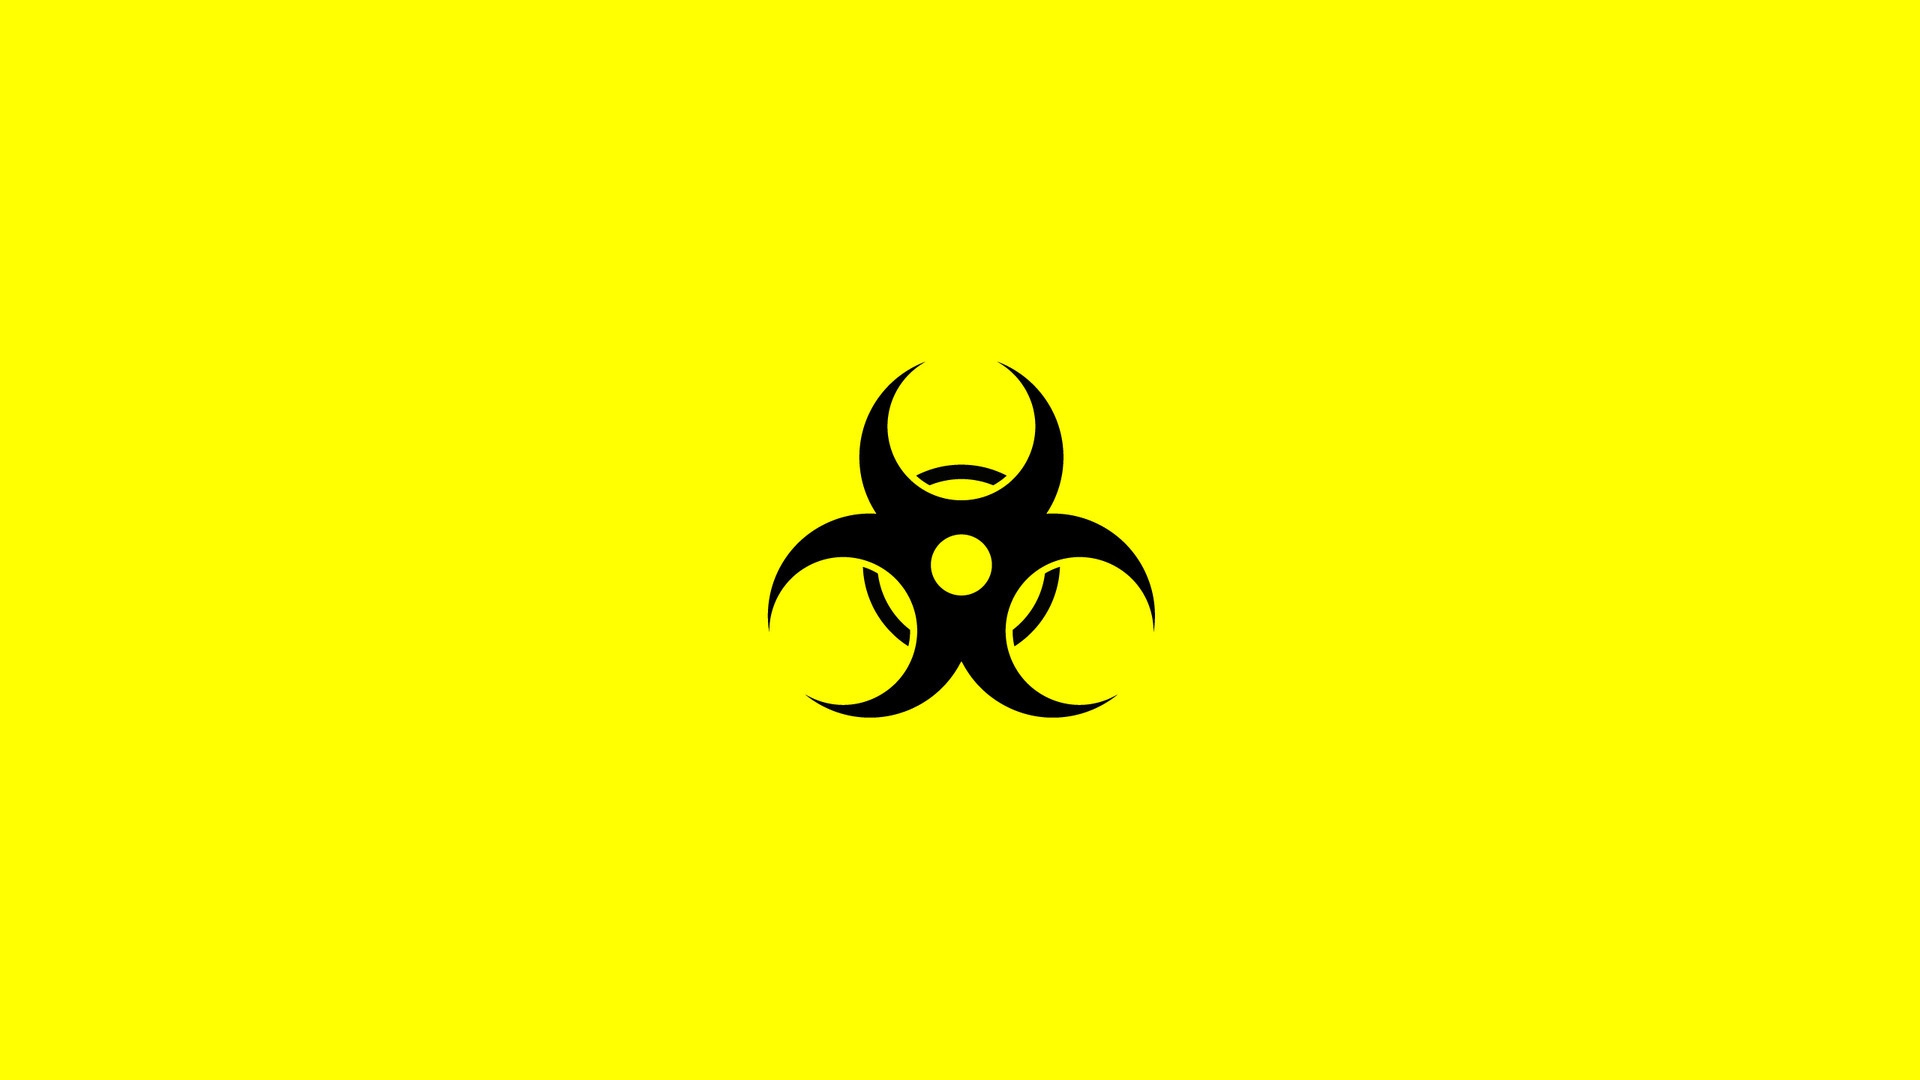 Biohazard Symbol HD Wallpaper